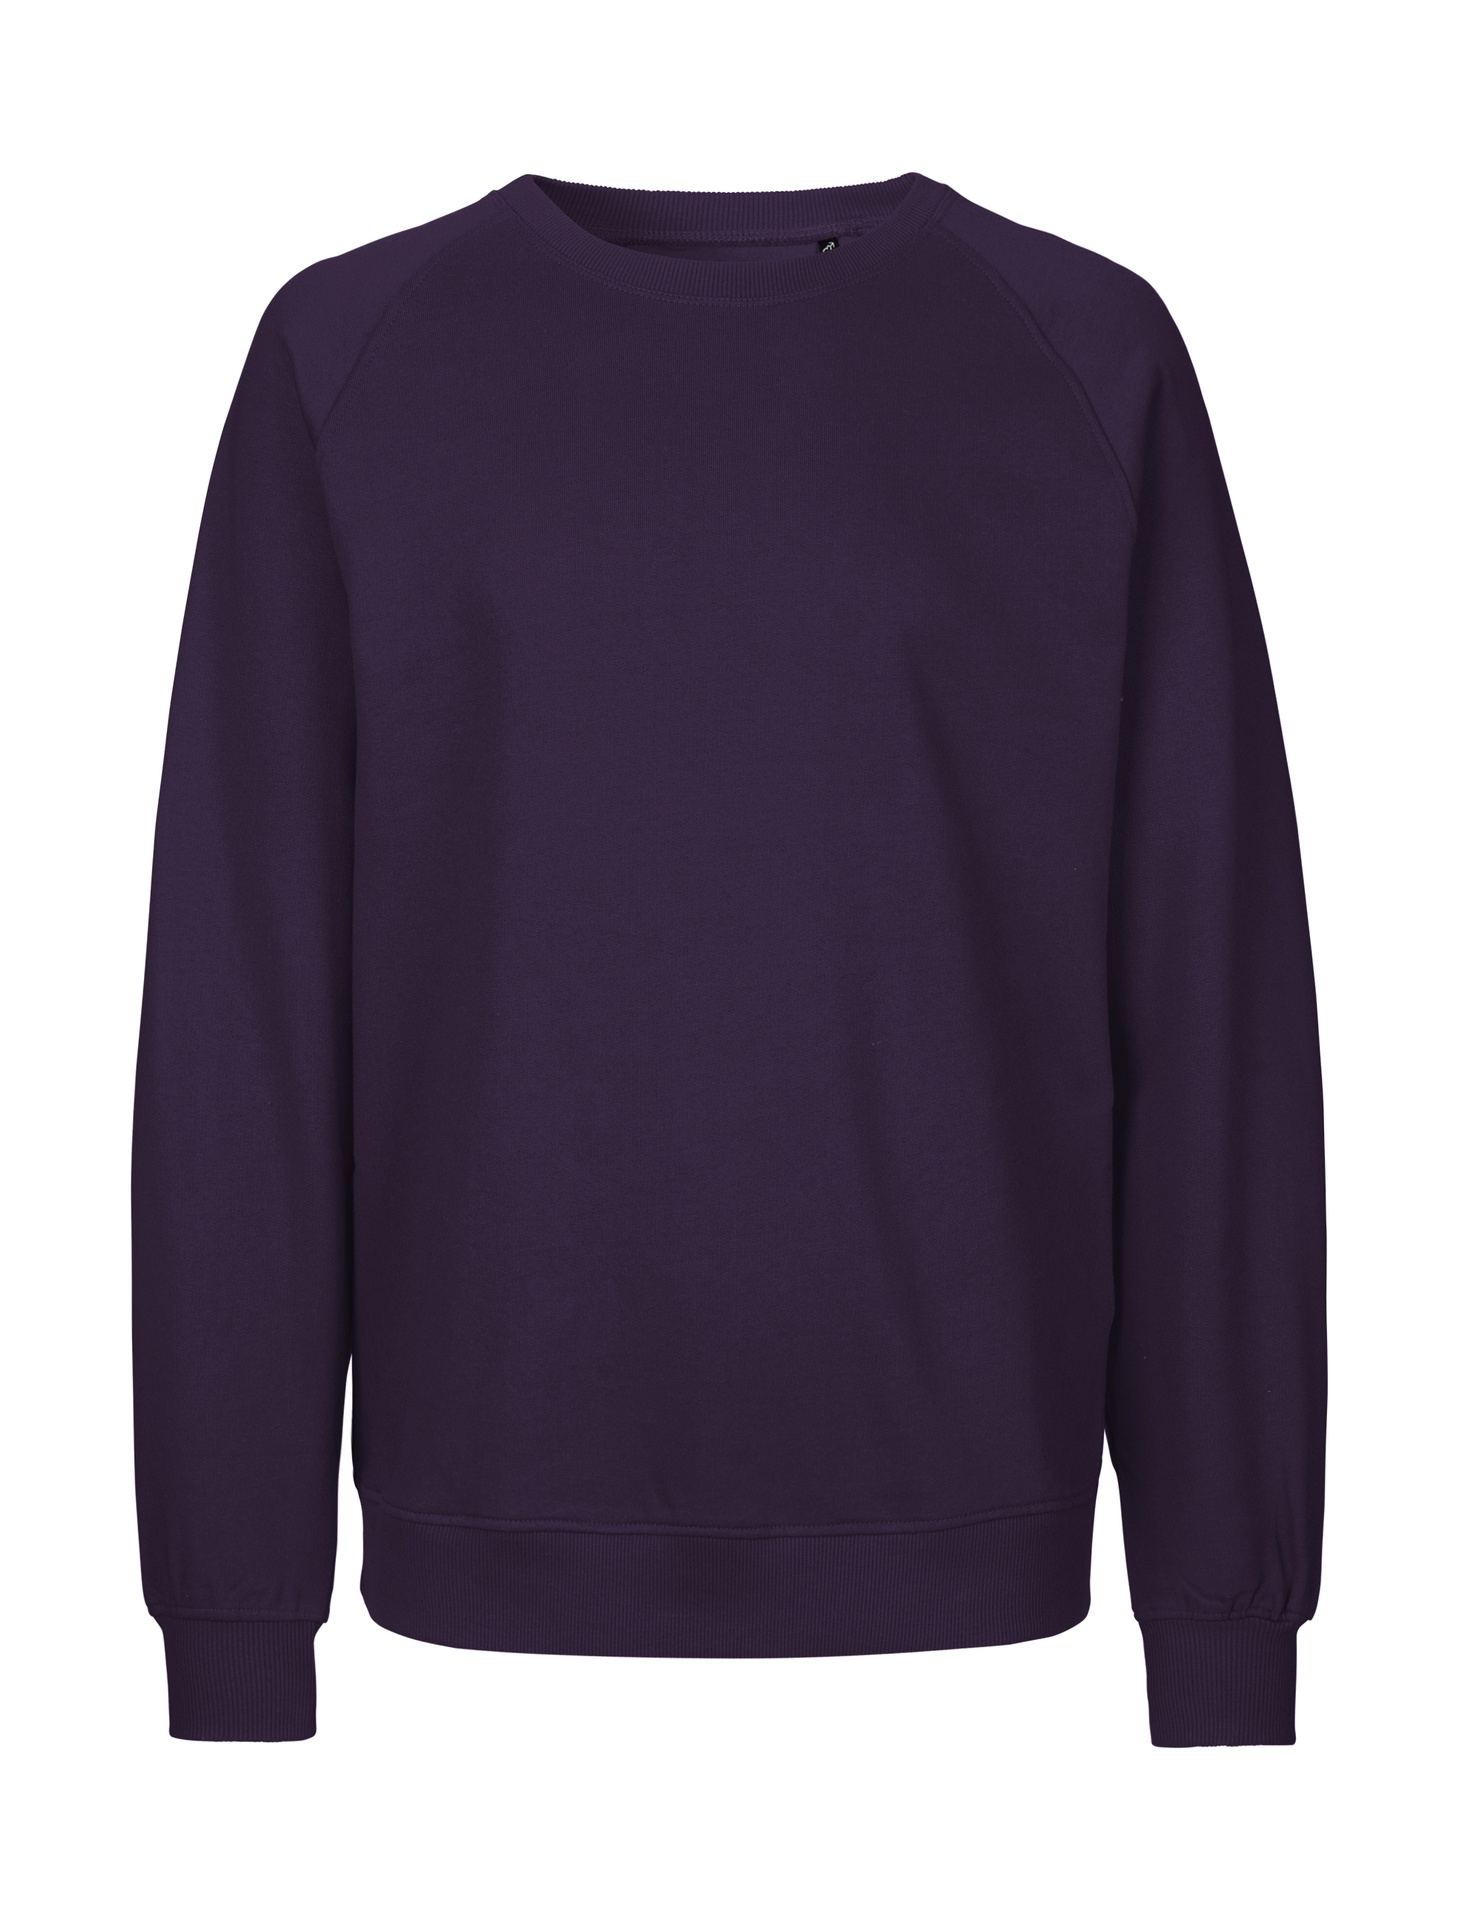 [PR/02899] Unisex Sweatshirt (Purple 81, XL)